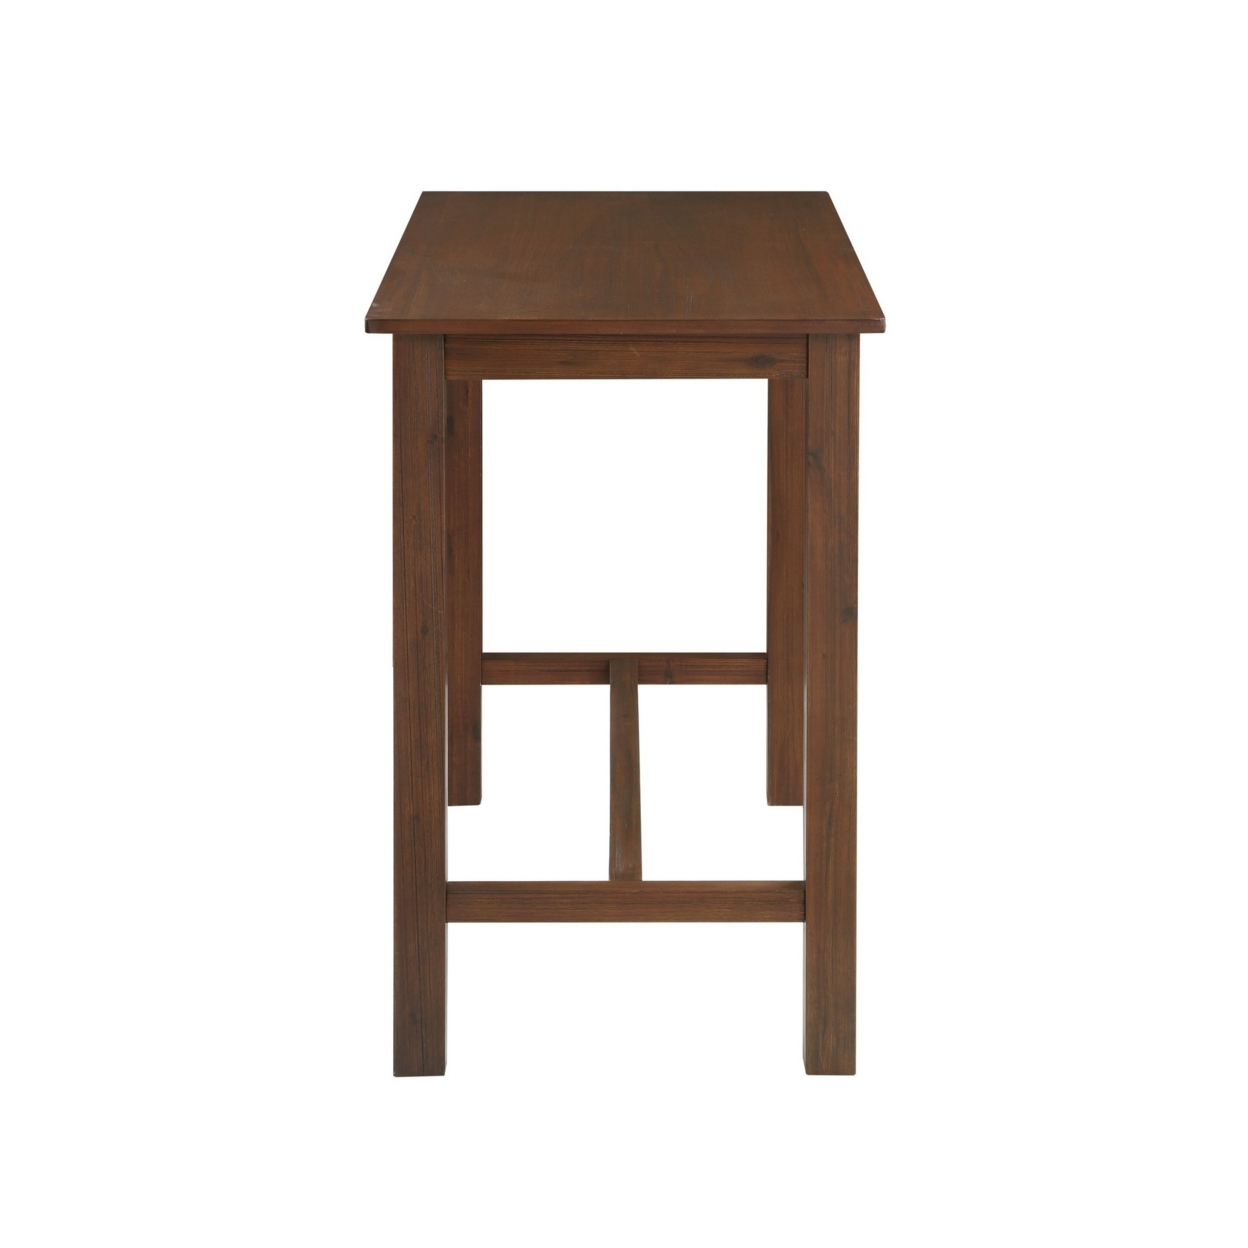 Rustic Rectangular Wooden Pub Table With Block Legs, Brown- Saltoro Sherpi